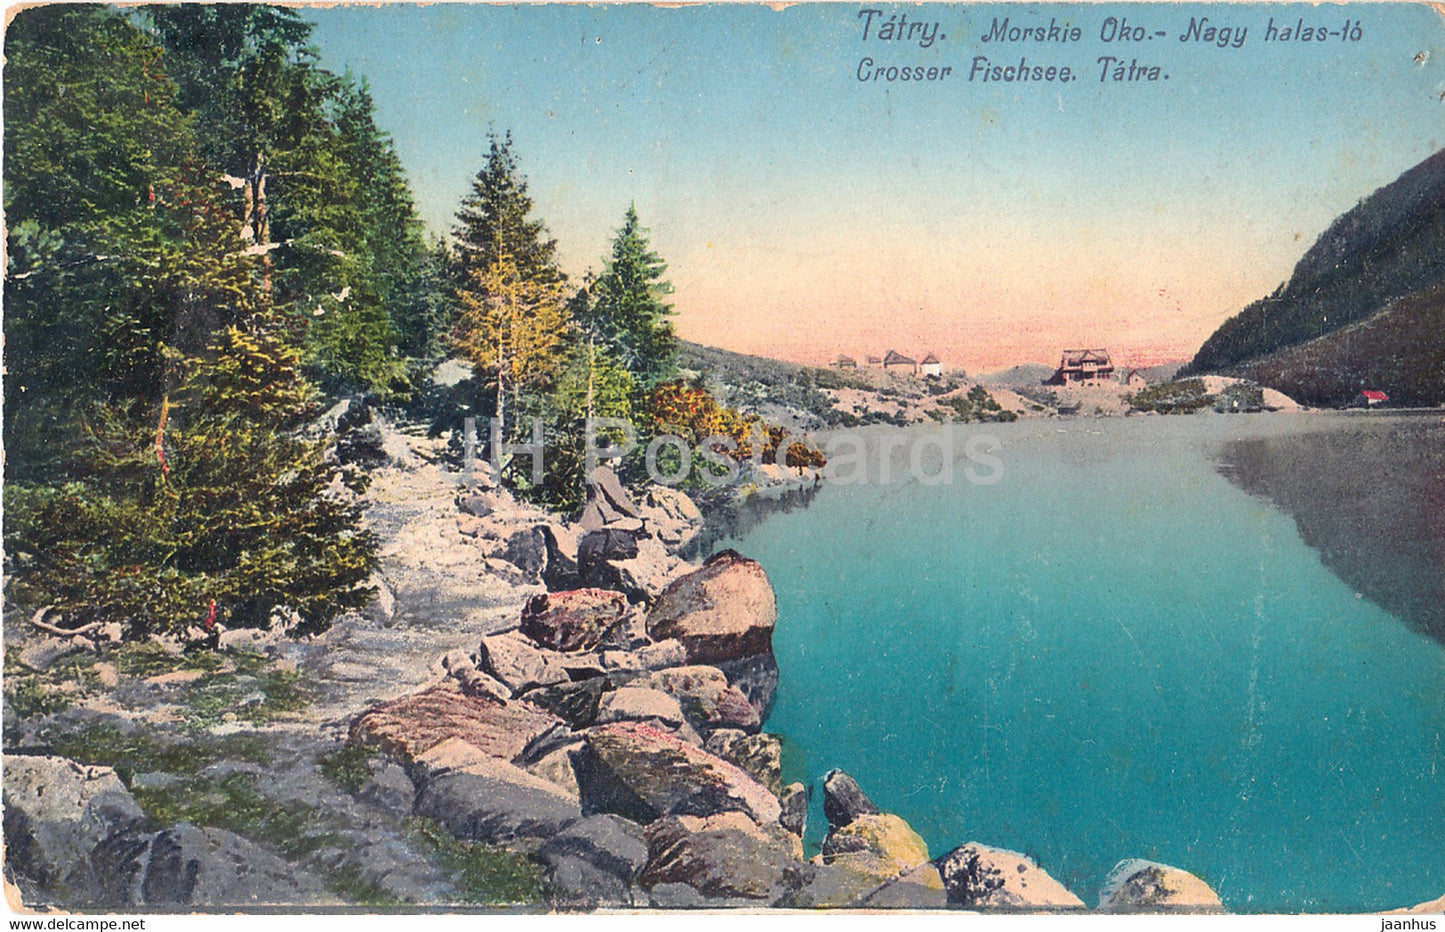 Tatry - Morskie Oko - Nagy halas to - Crosser Fischsee - Tatra - 1054 - old postcard - Poland - used - JH Postcards